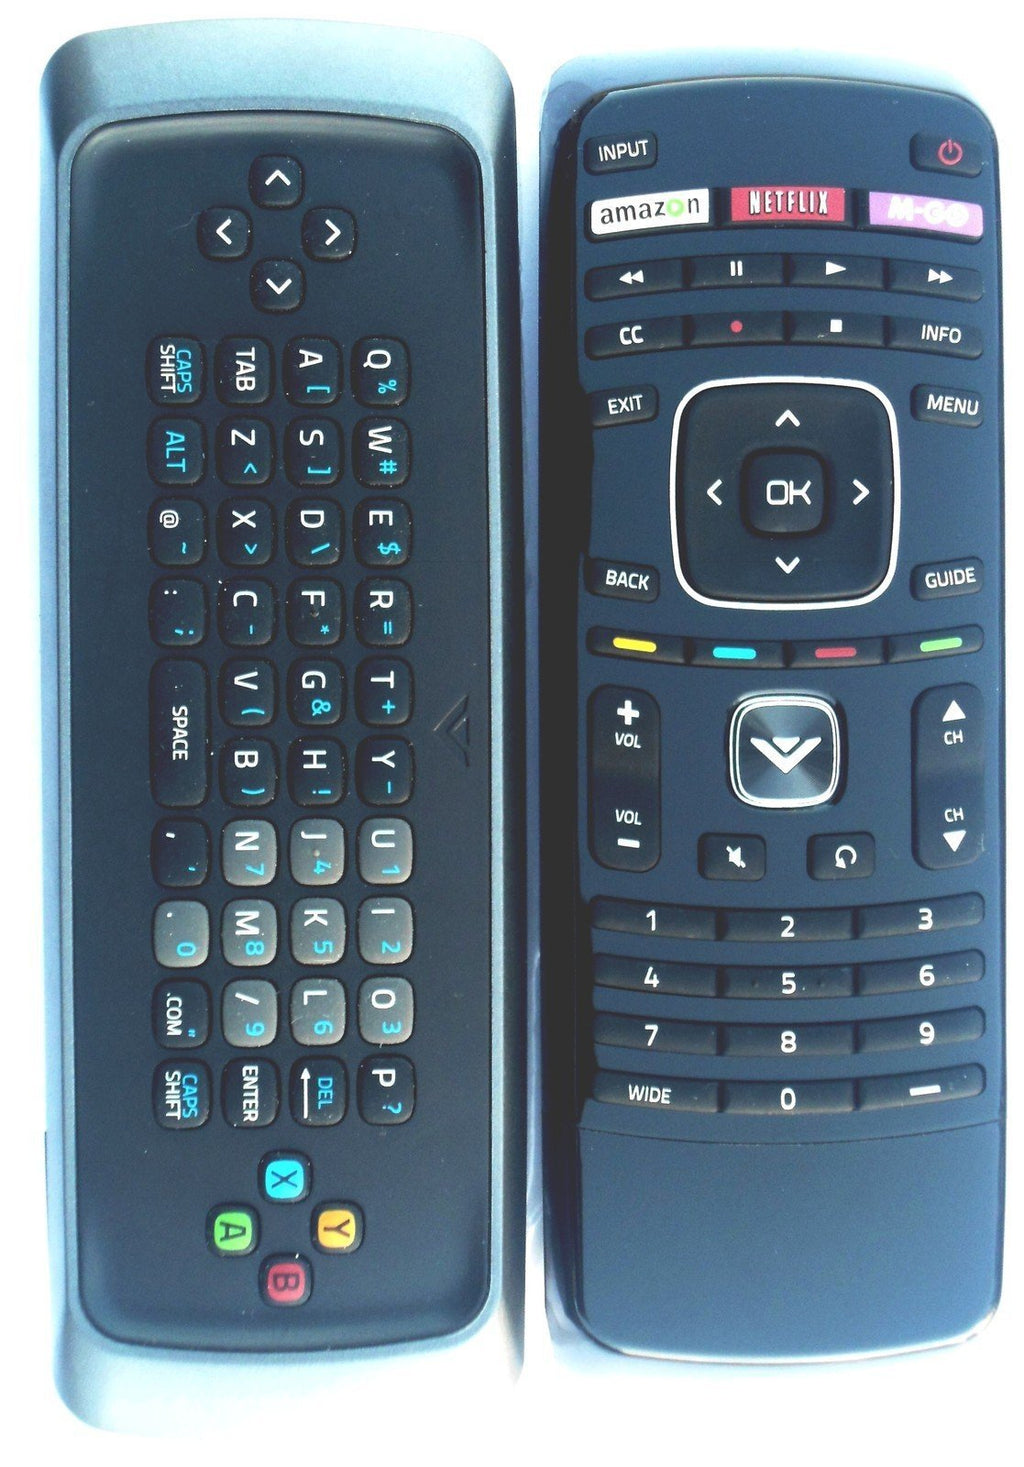 New XRT300 Keyboard Remote-for VIZIO M320SL M370SL M420SL M470SL M550SL M470VSE M650VSE M550VSE E420i-A1 E500i-A1 E601i-A3 E470i-A0 M470VSE - M650VSE - M550VSE E420i-A1 Internet TV